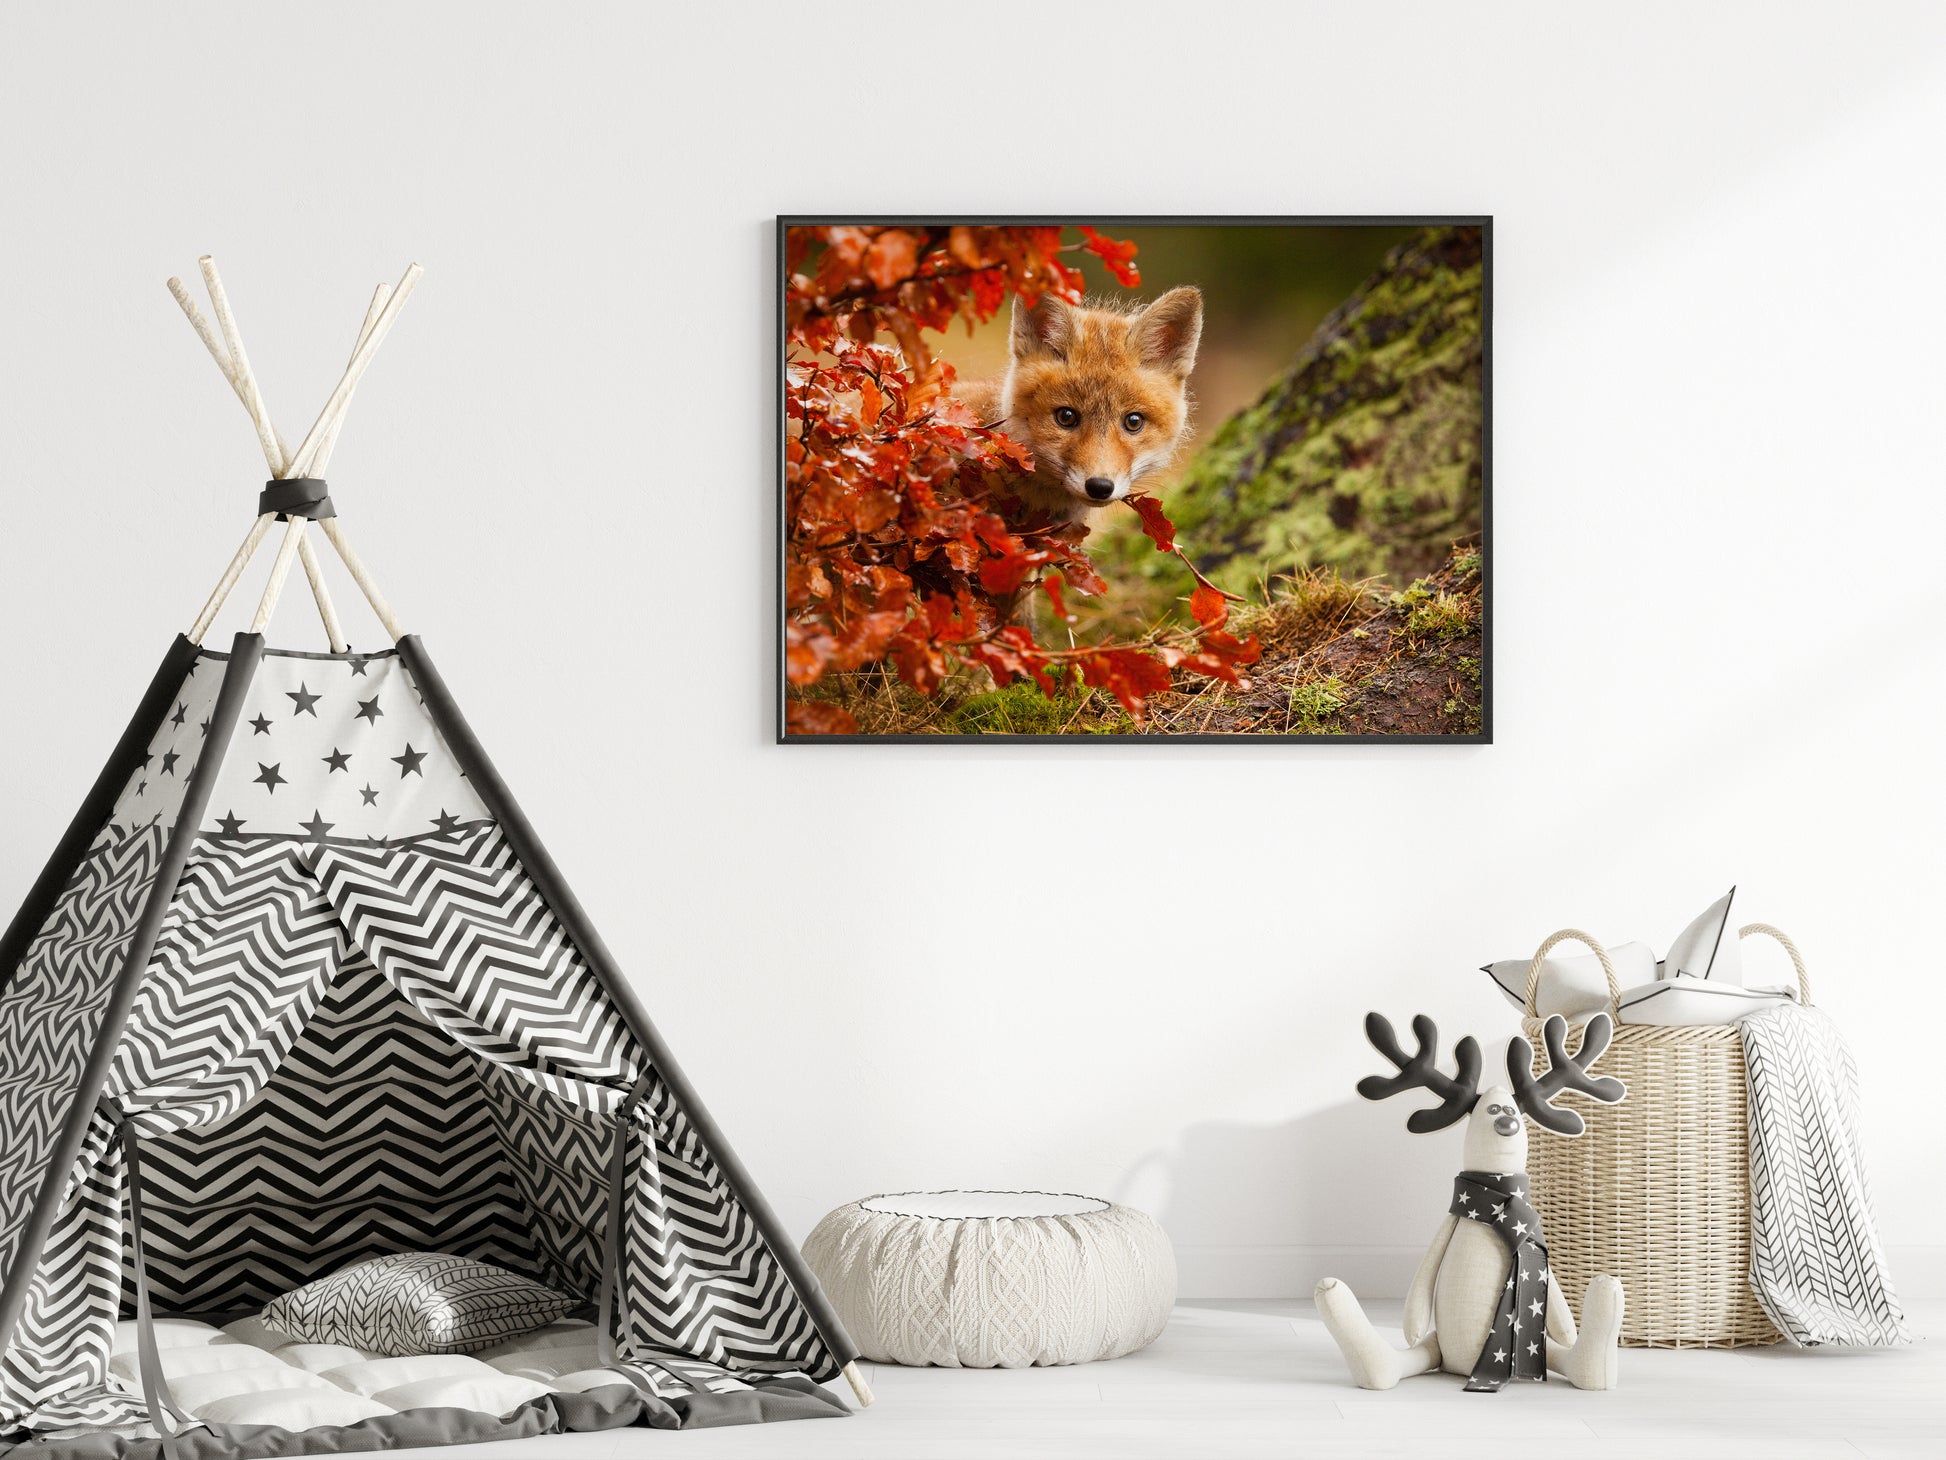 Woodland Animal Nursery Art: Peek-A-Boo Baby Fox Pup And Fall Leaves - Animal / Wildlife / Nature Artwork - Wall Decor - Framed Wall Art Print